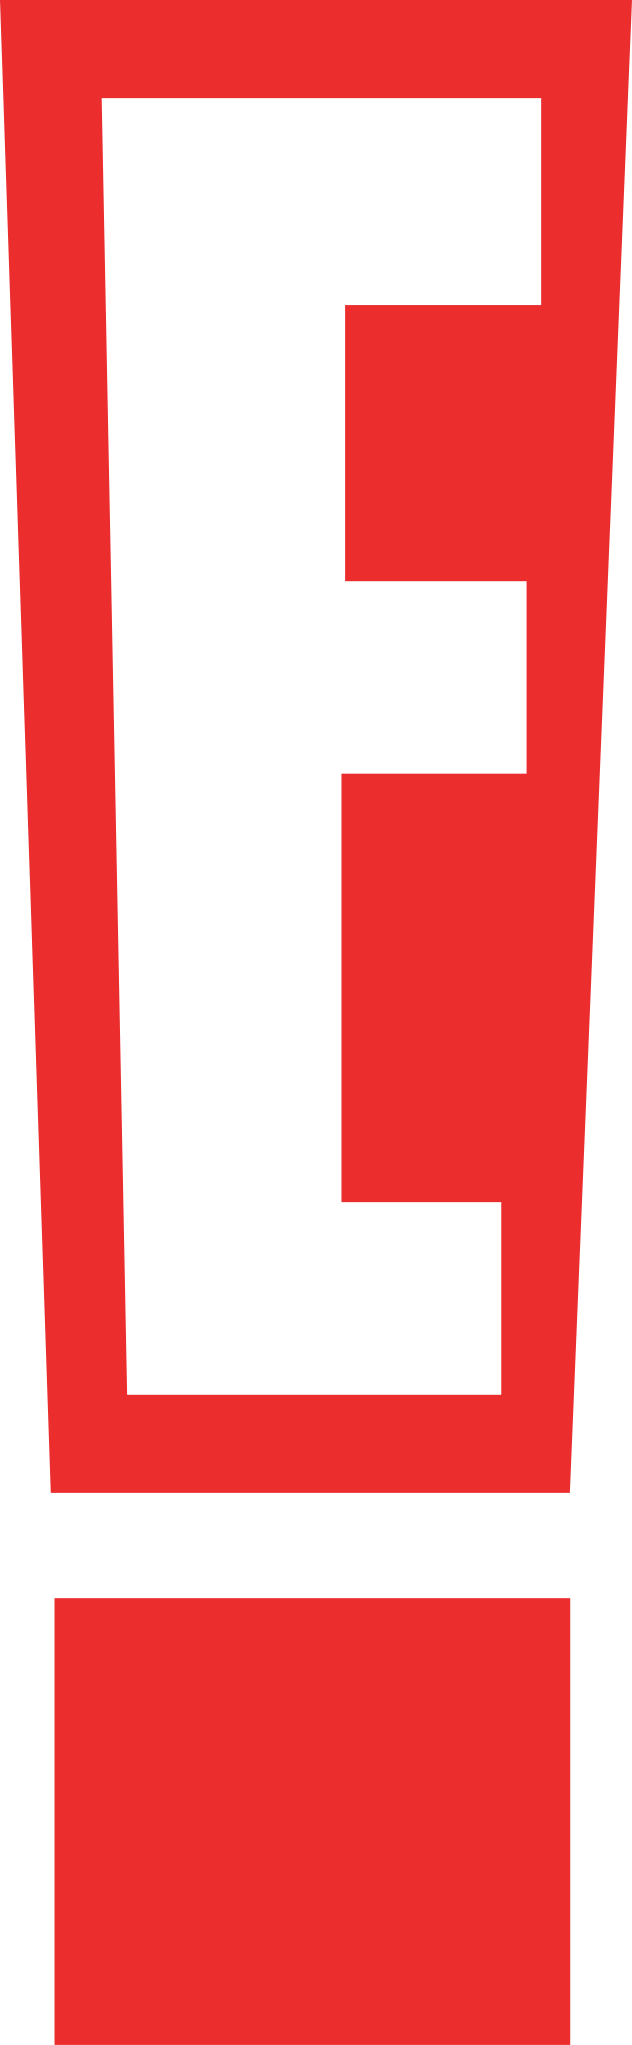 File:One TV Logo.svg - Wikipedia